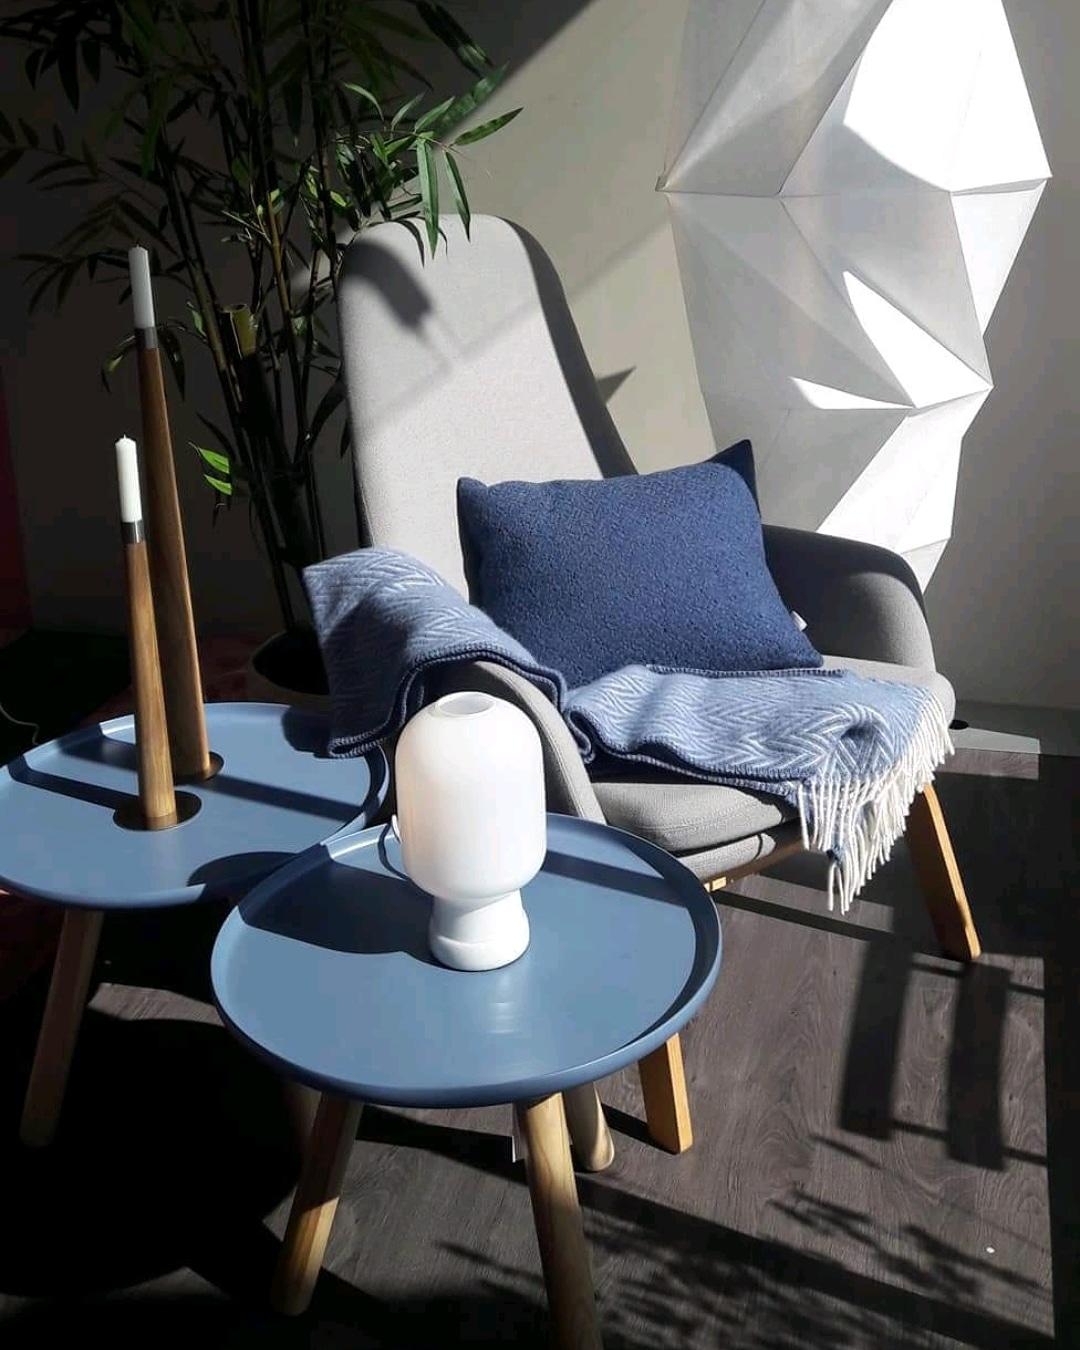 #normanncopenhagen #designimdorf #styling #shop #kotinordicorigin #vaduz #livingroomideas

